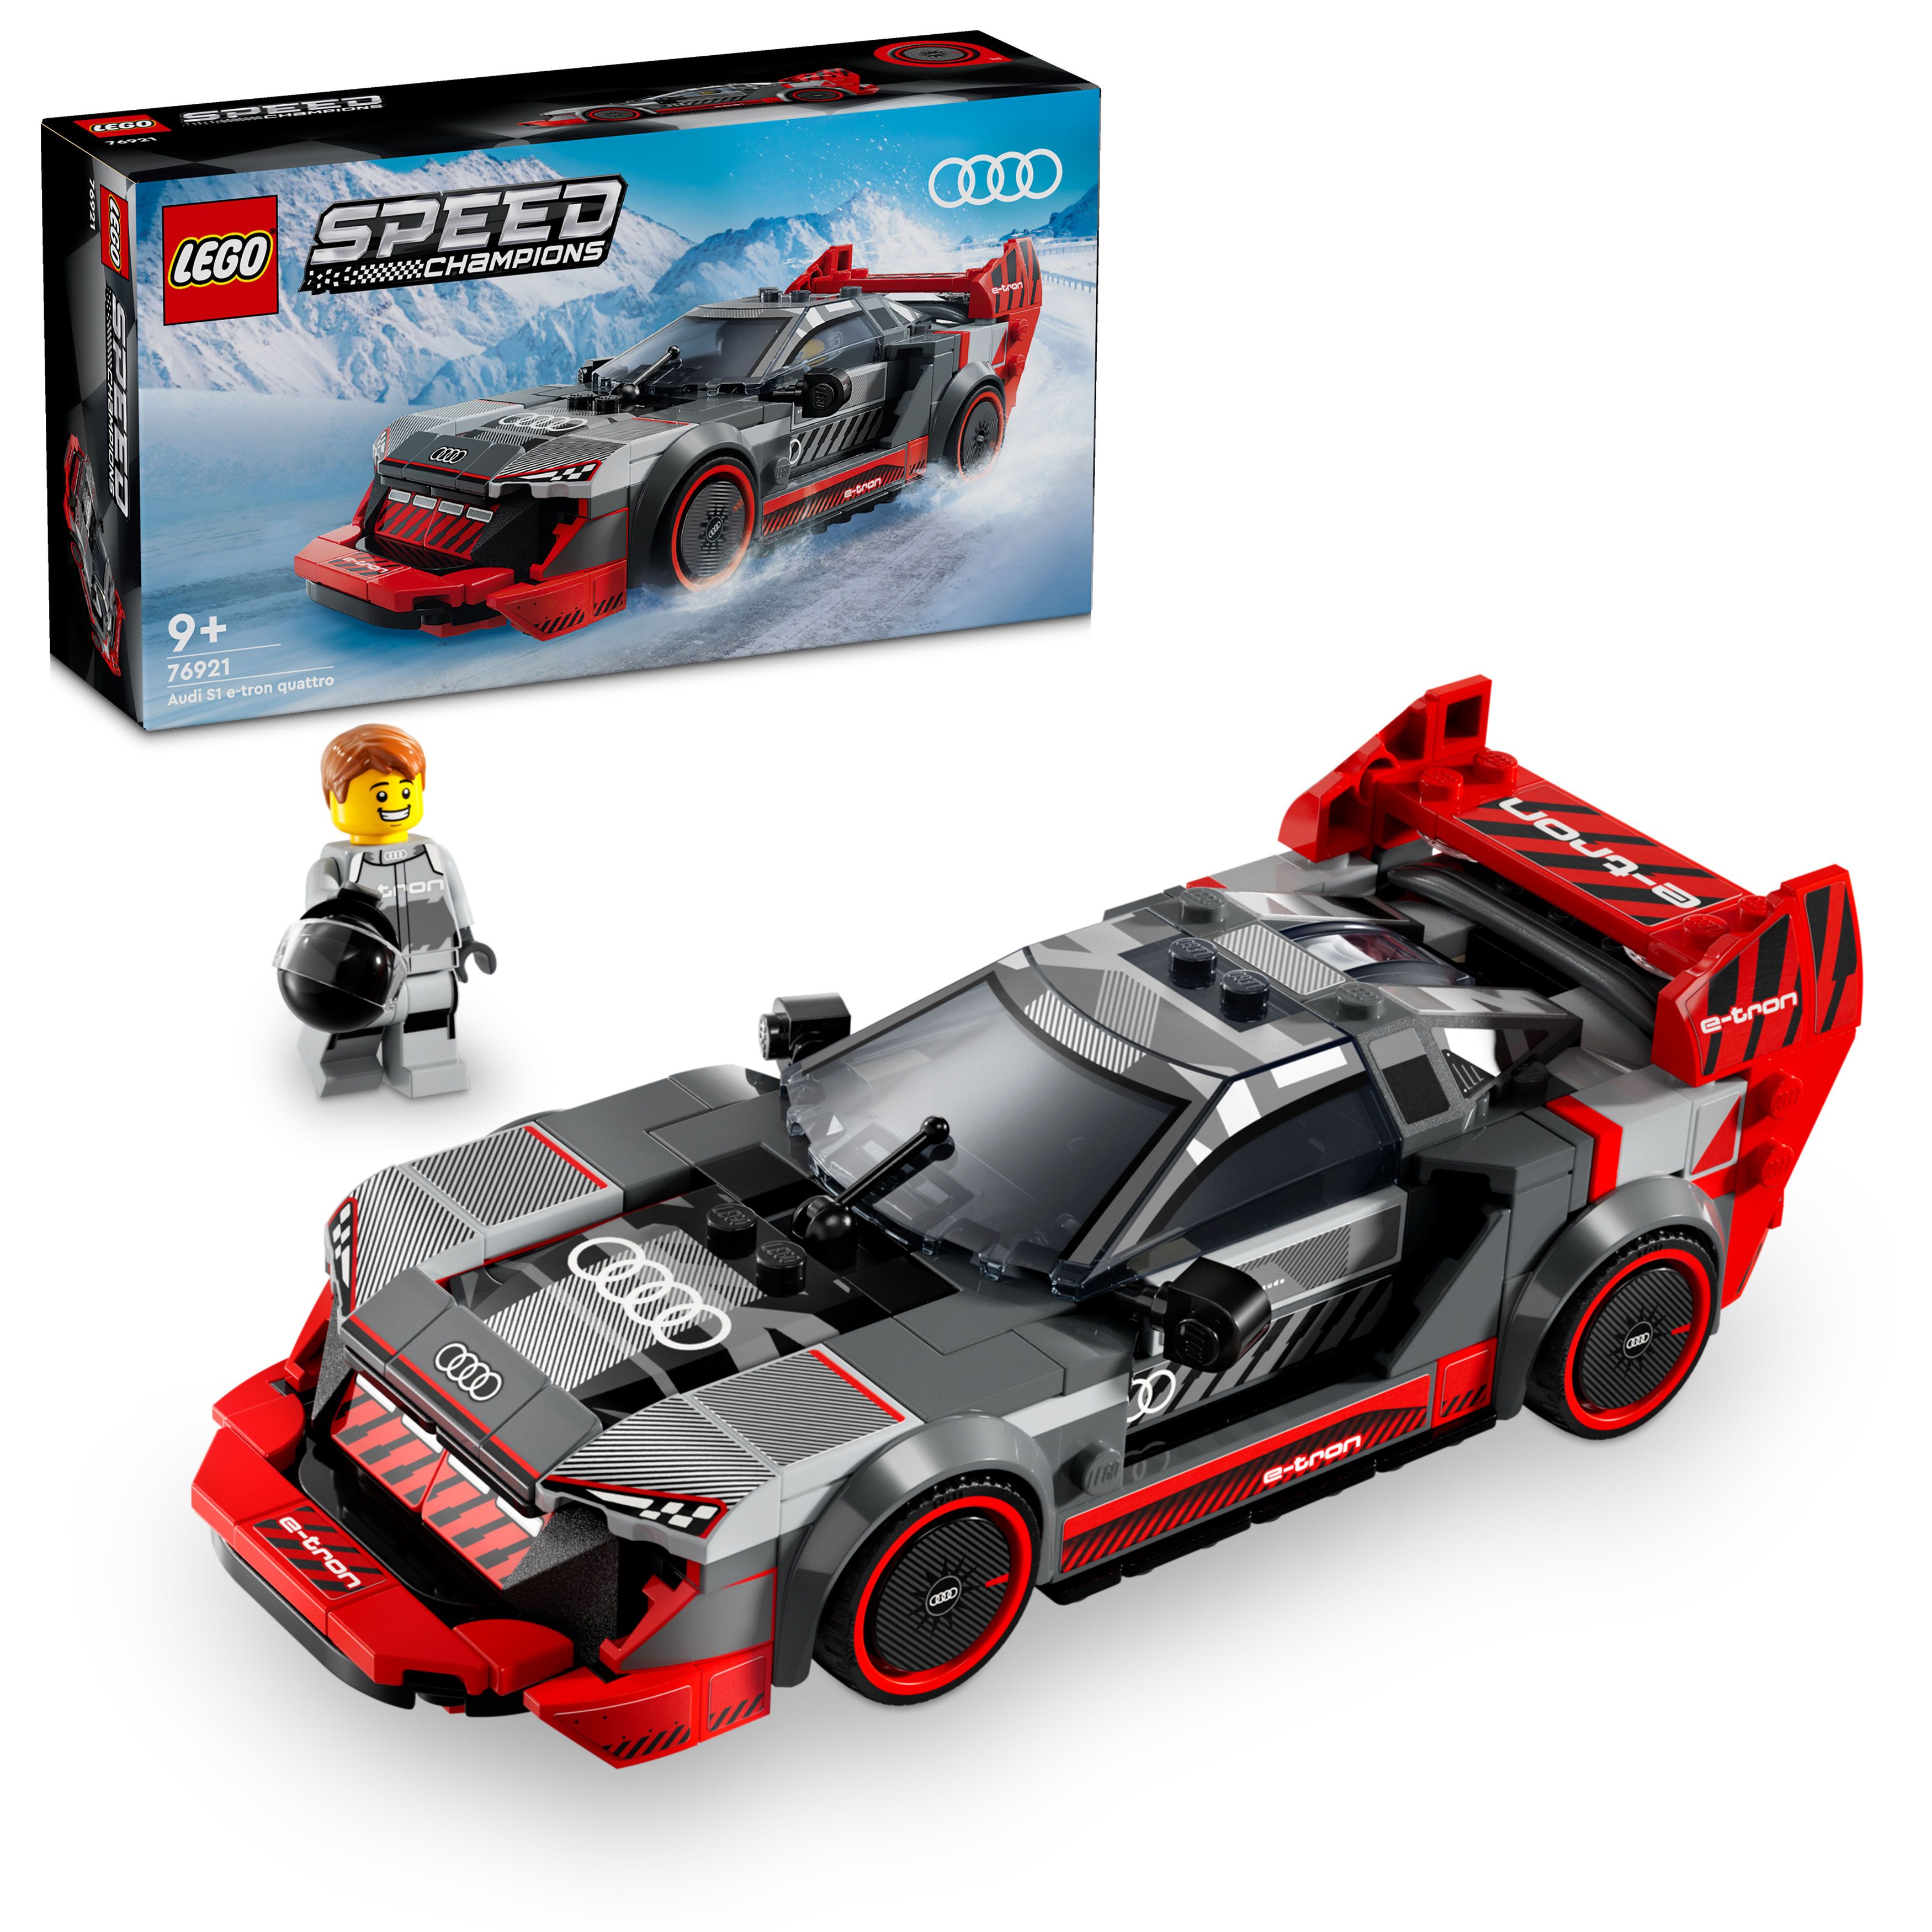 LEGO Speed Champions - Audi S1 e-tron quattro-racerbil (76921) - Leker